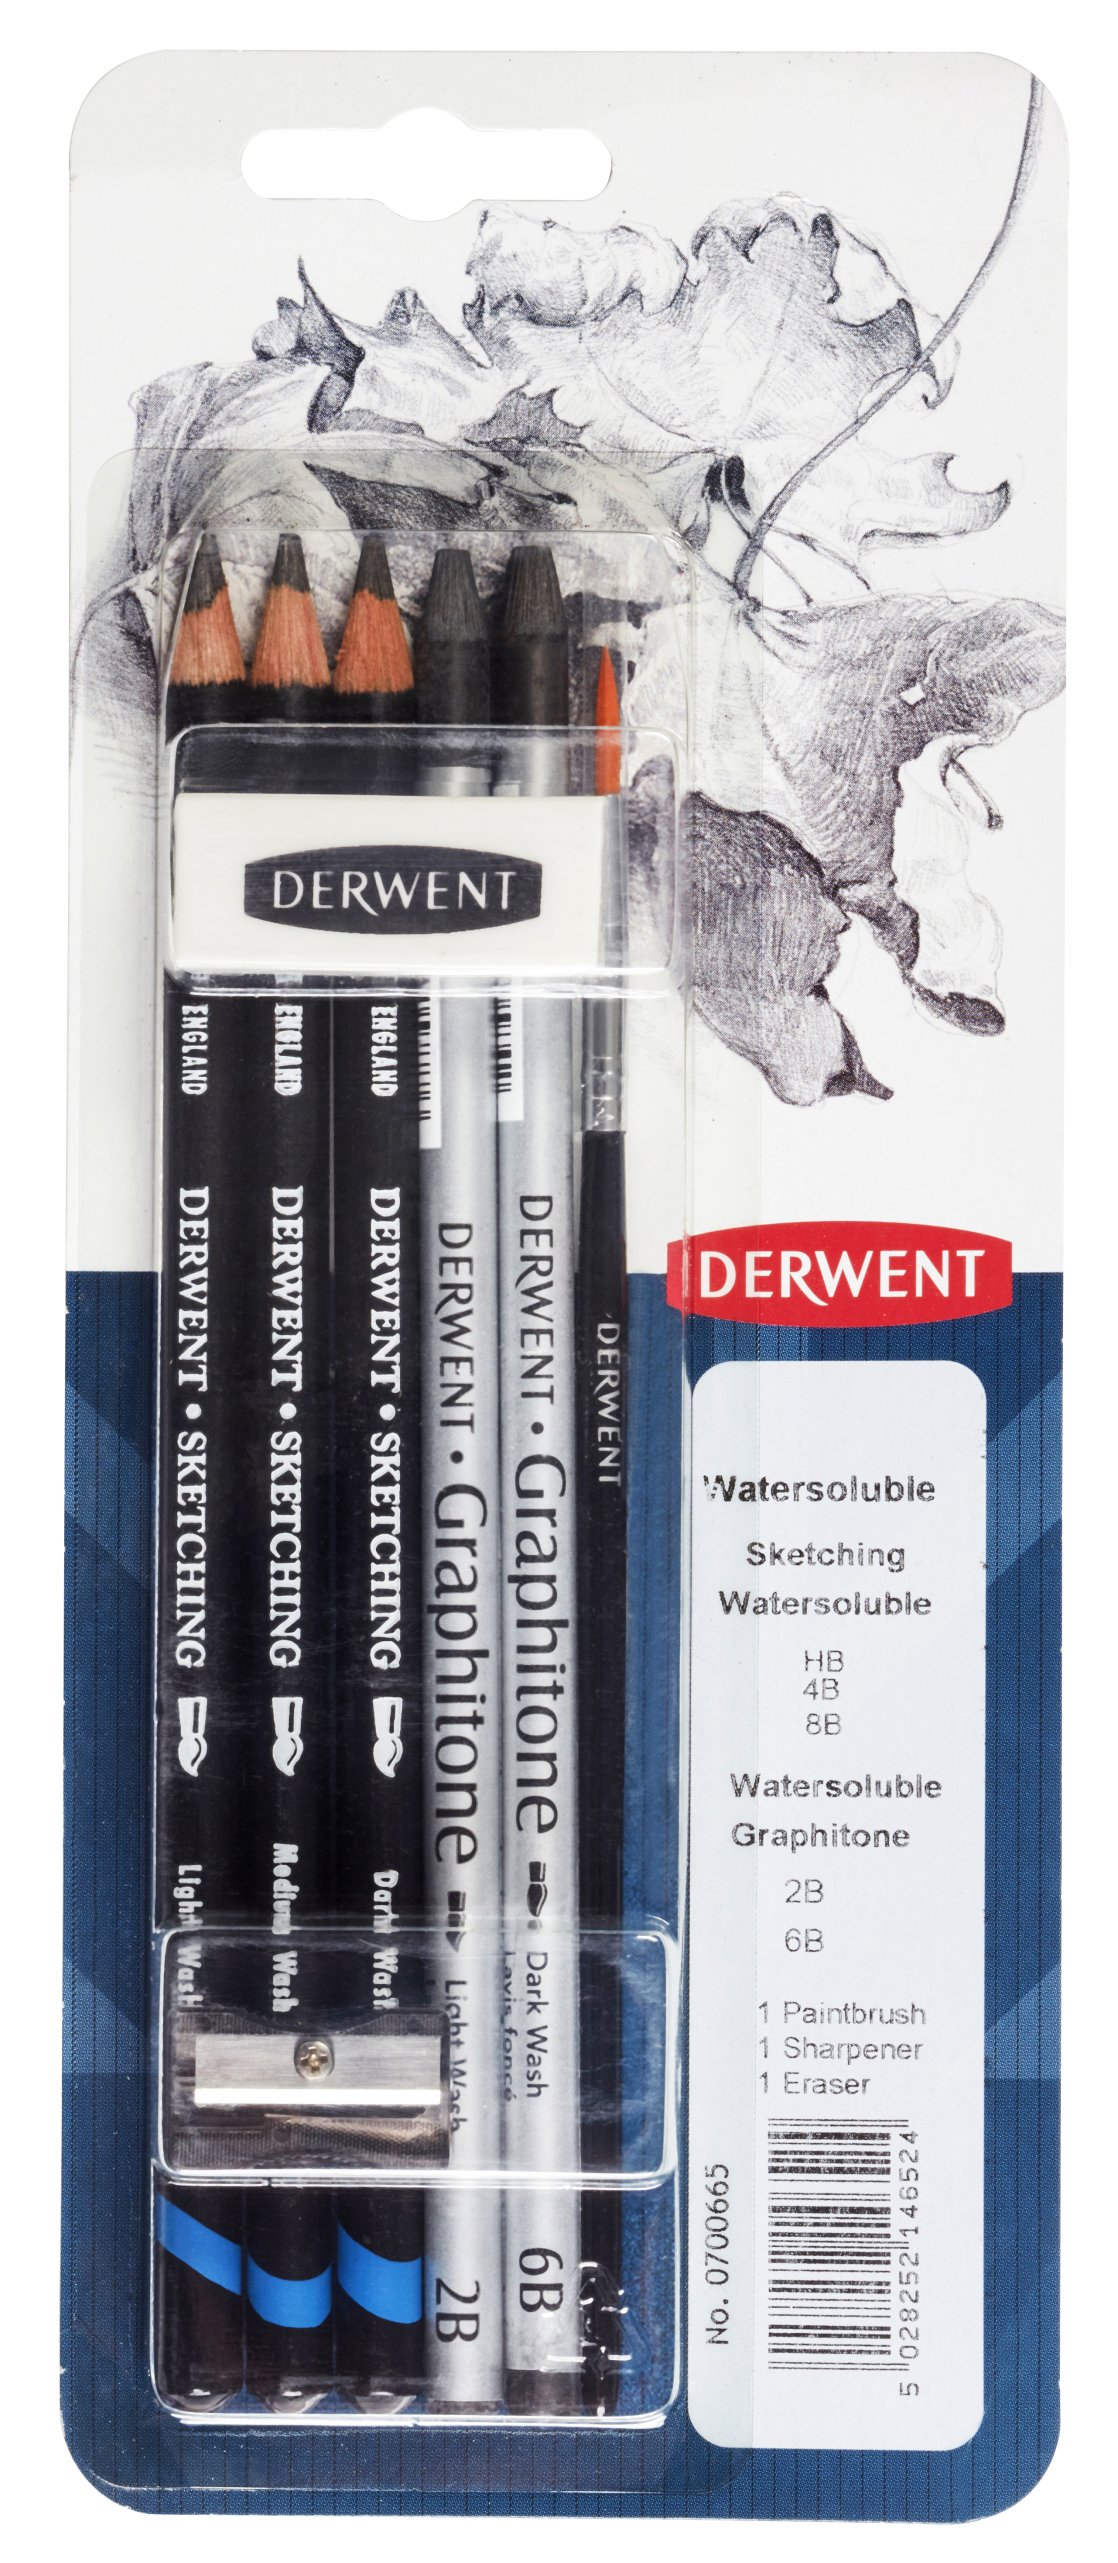 Derwent Water Soluble Sketching Pencil HB